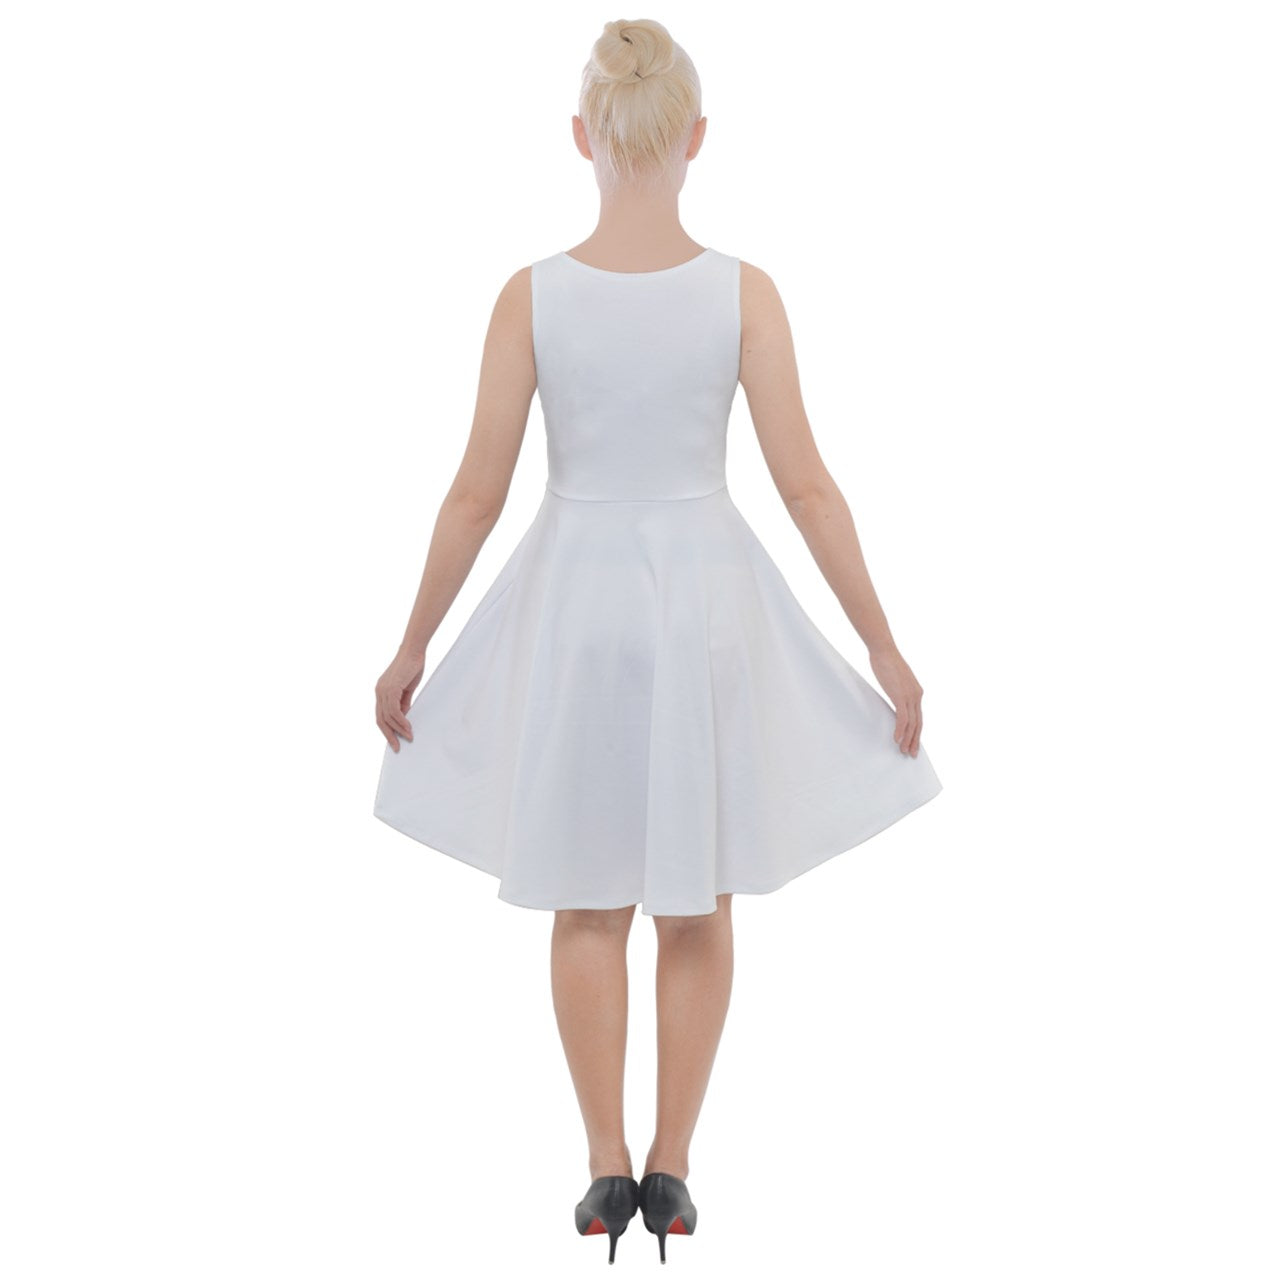 Pattern 287 Knee-Length Skater Dress with Pockets